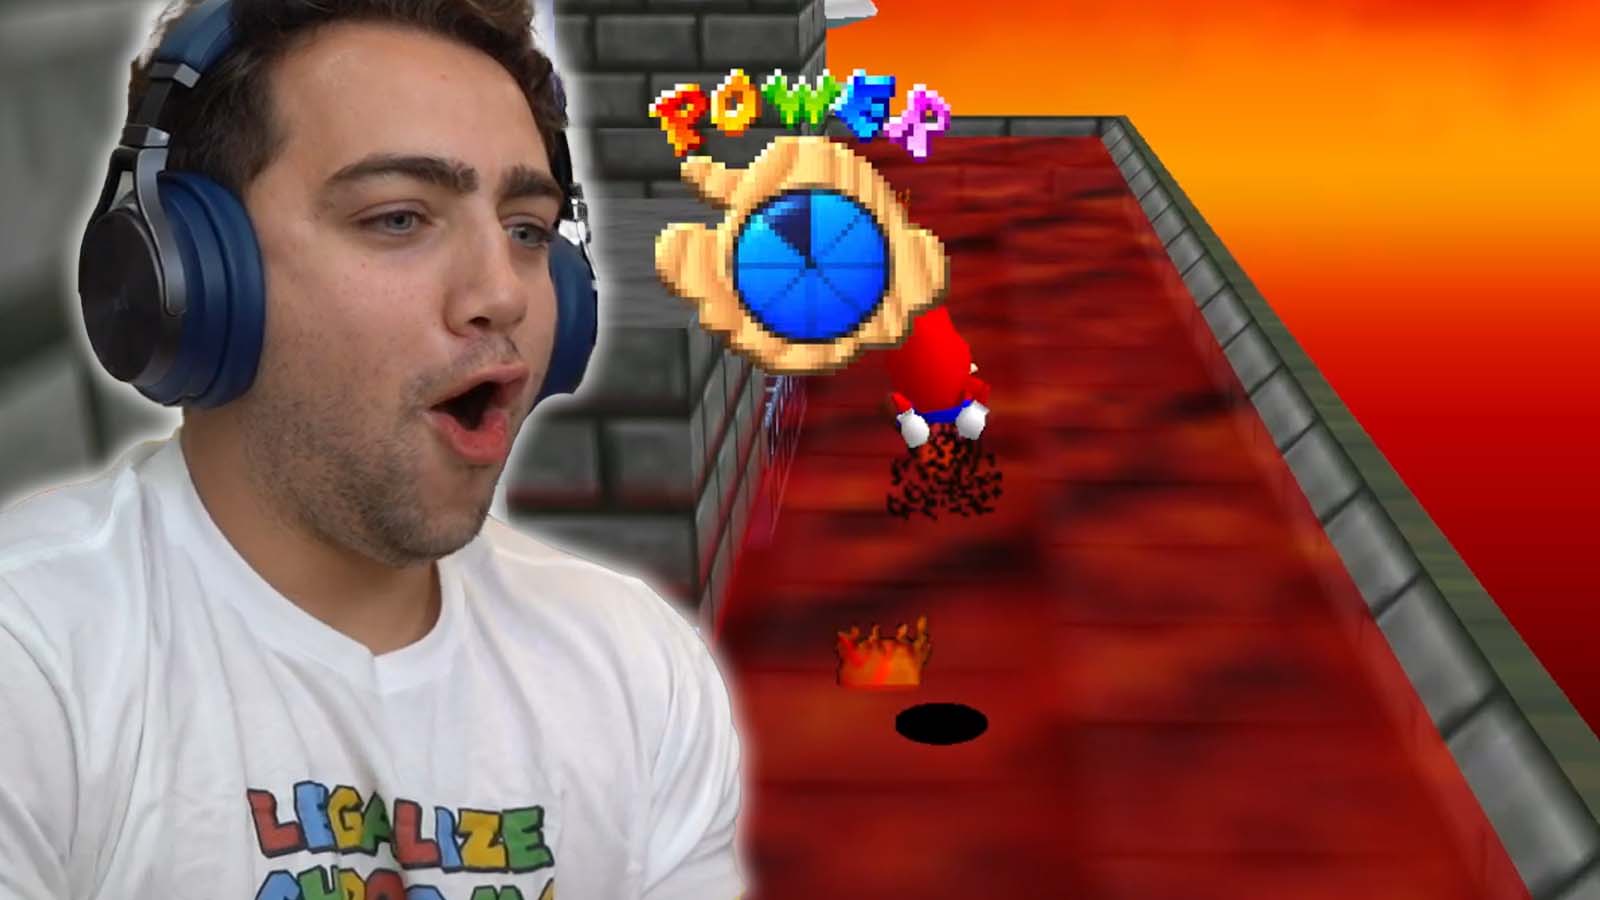 Super Mario Odyssey leads in the speedrunning community